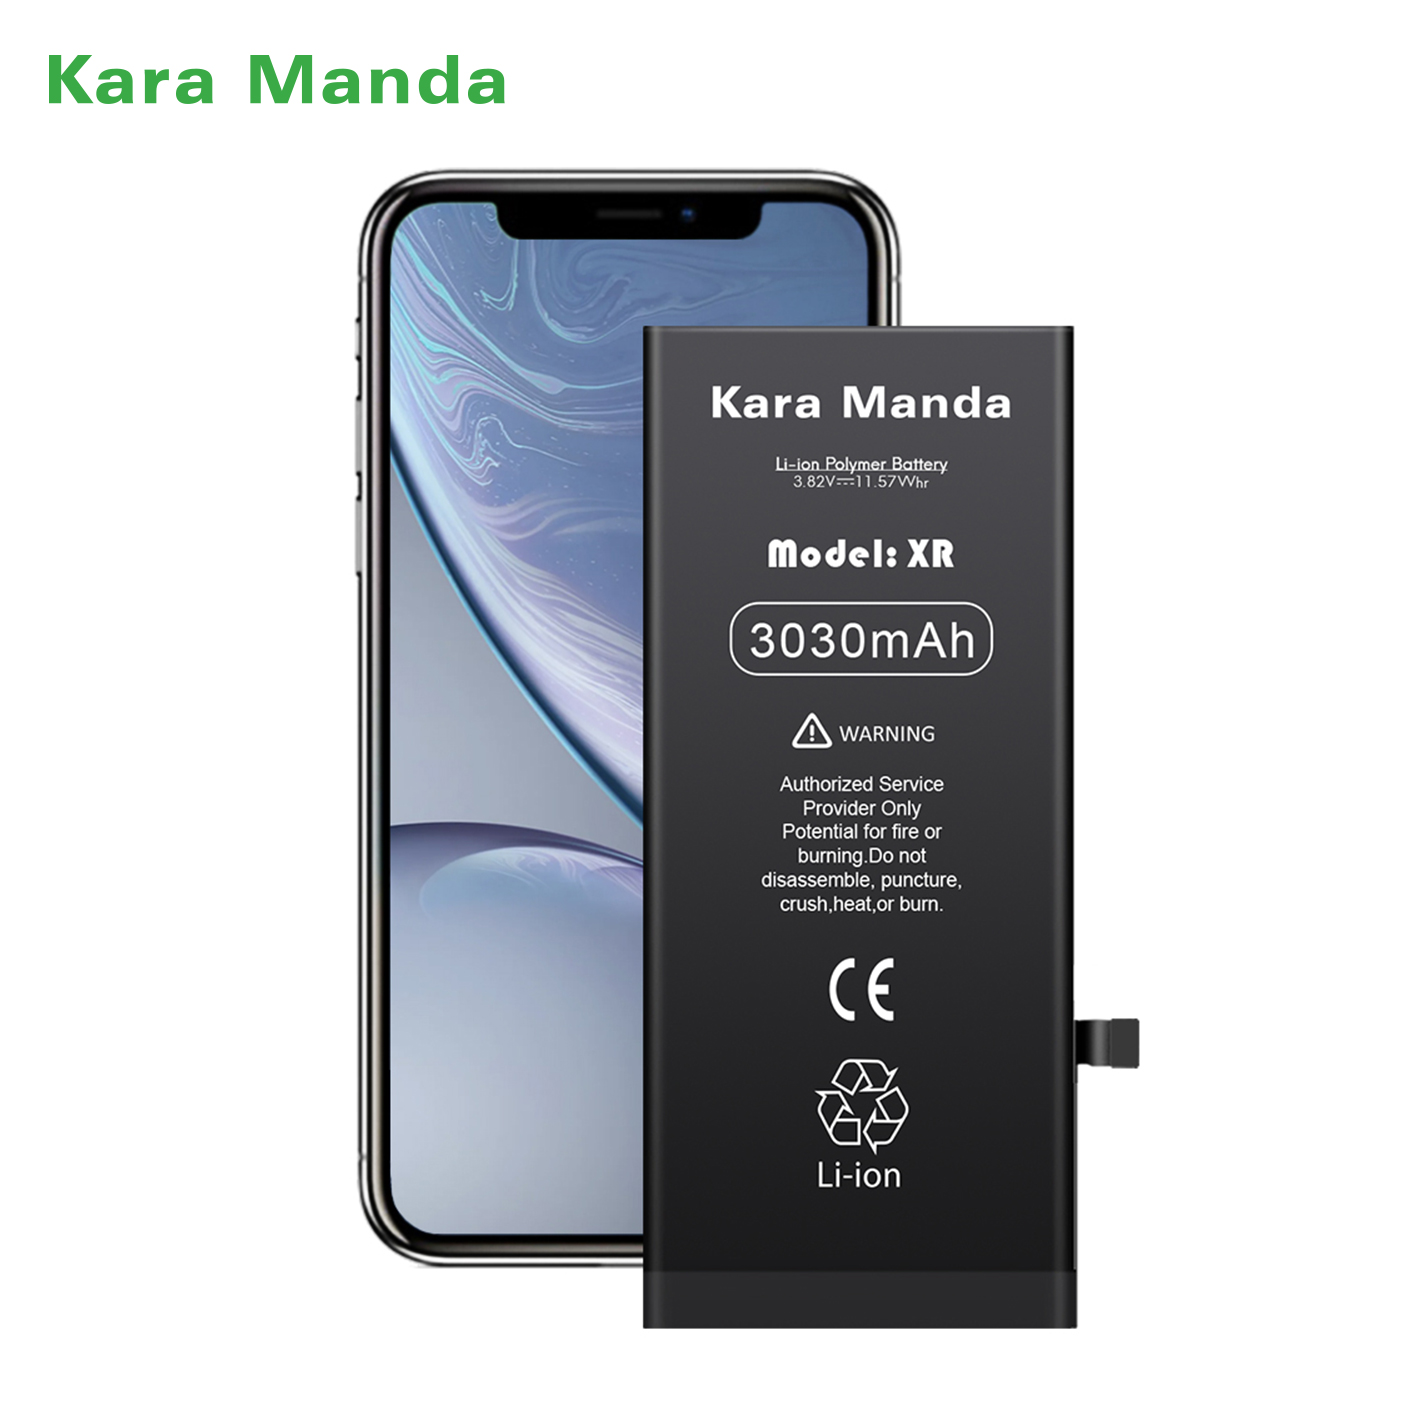 Get Premium Quality IPhone XR Replacement Batteries - Direct from Factory | Kara Manda